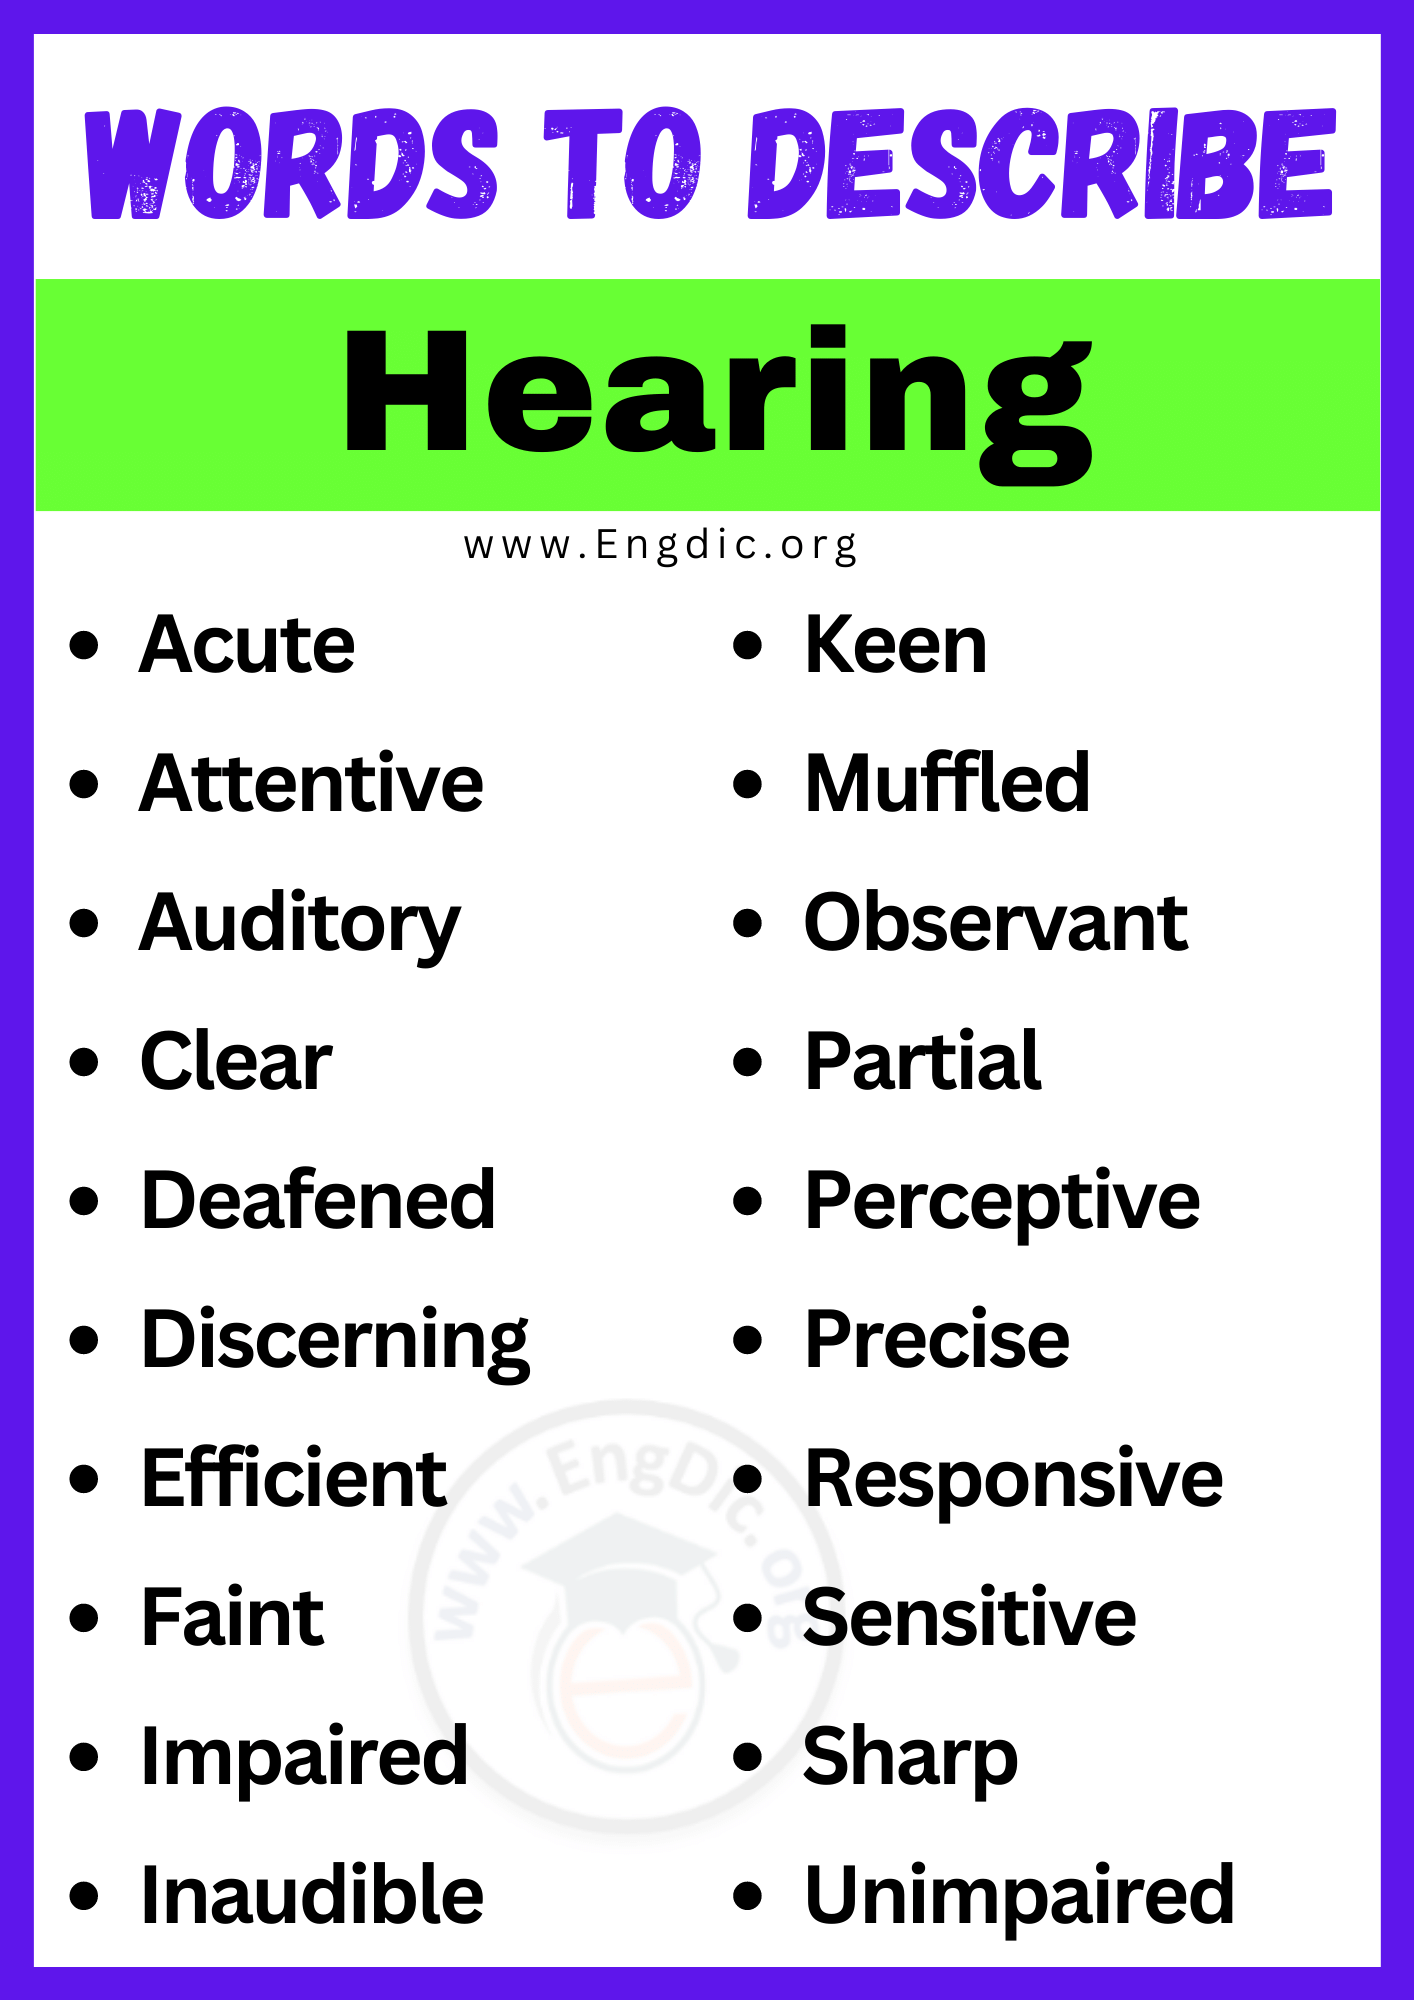 Words to Describe Hearing